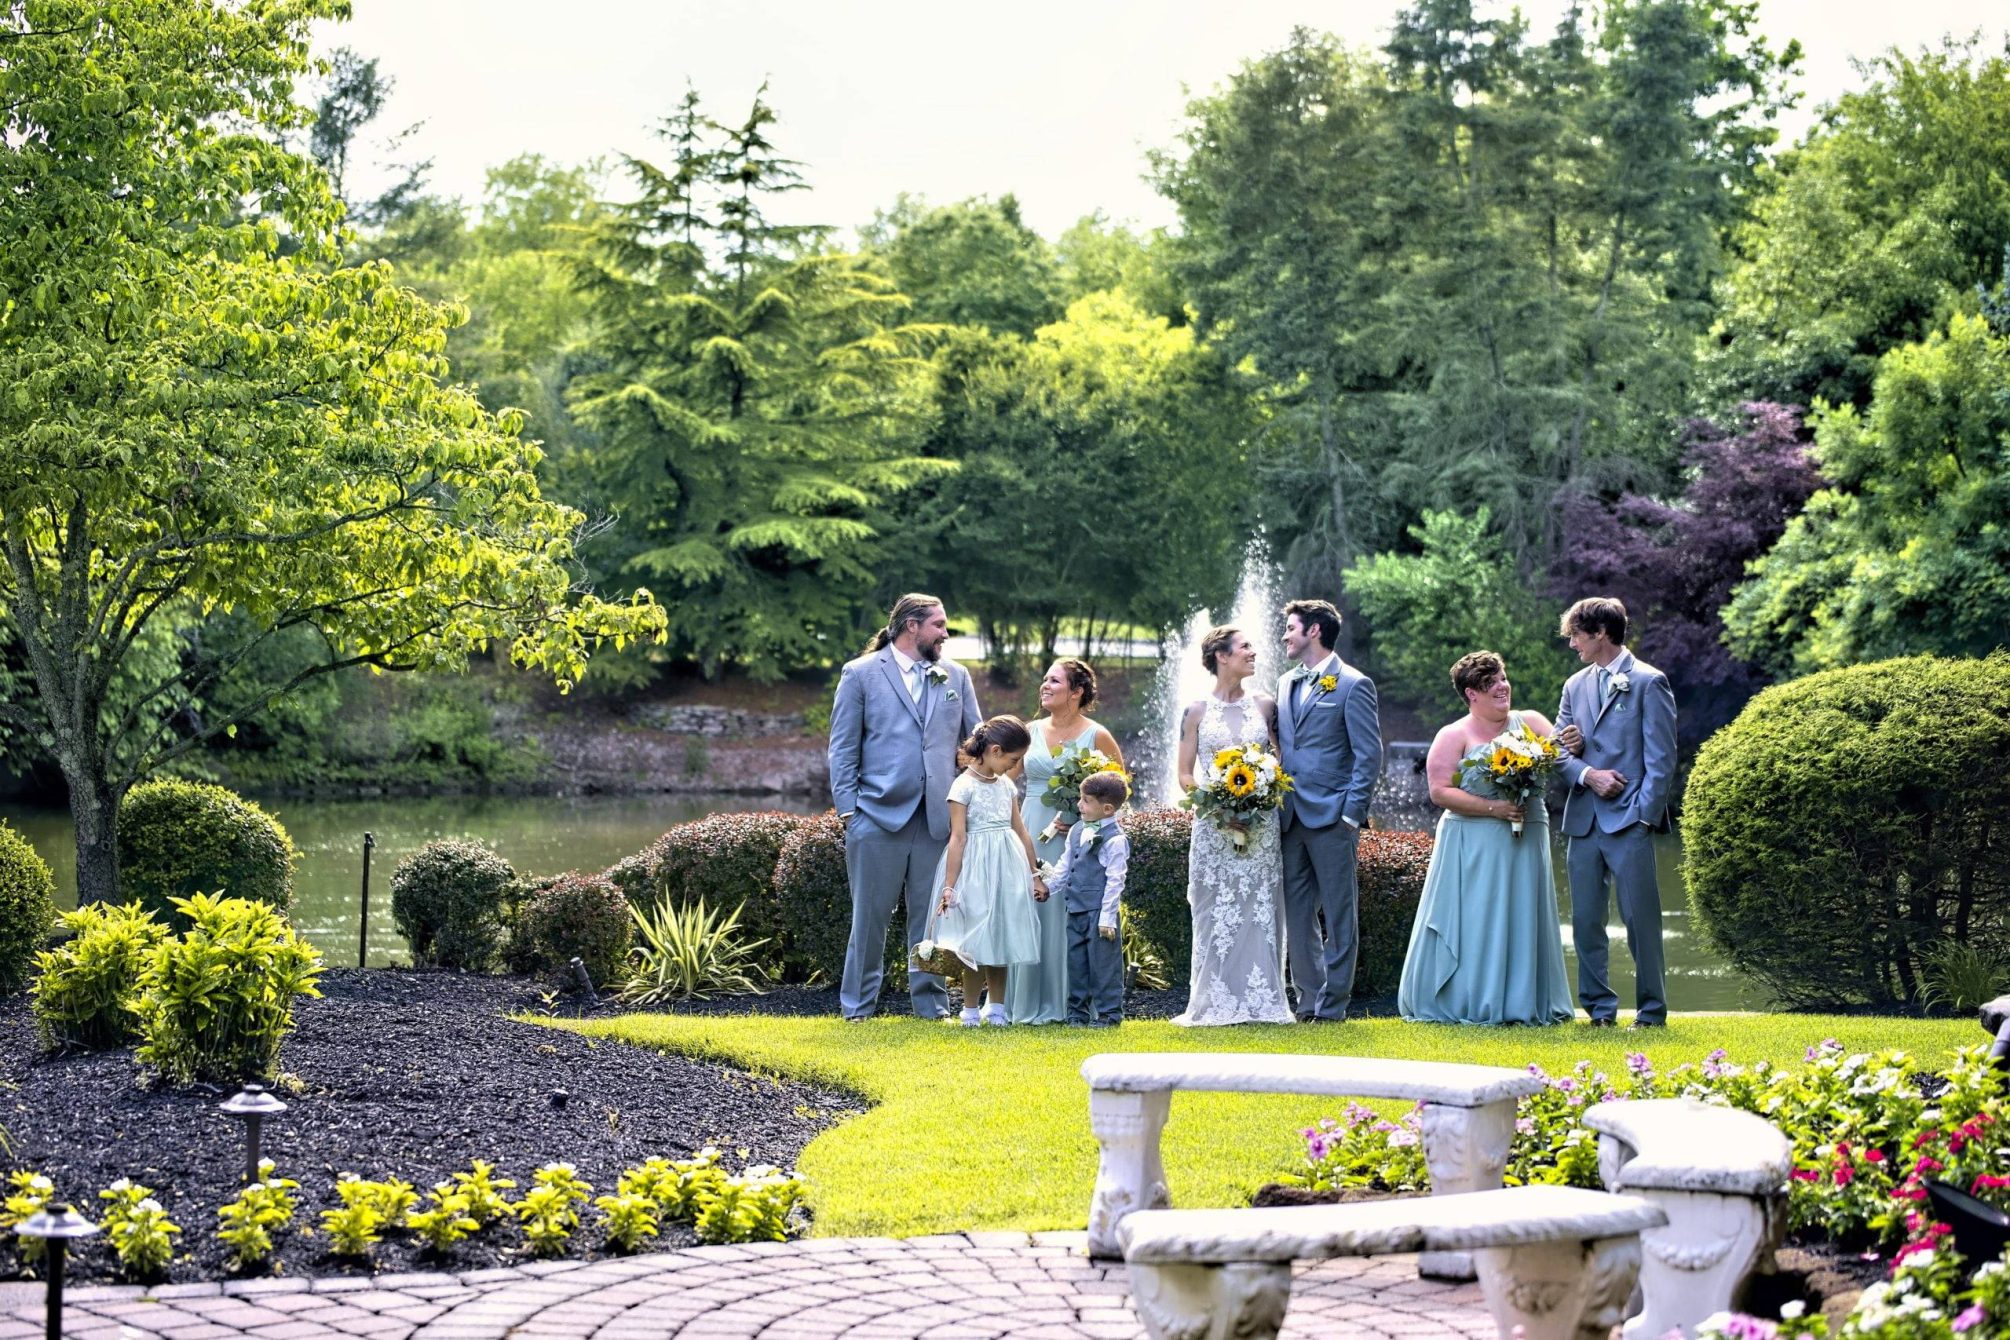 Bridgewater Manor wedding party in gardens by fountain